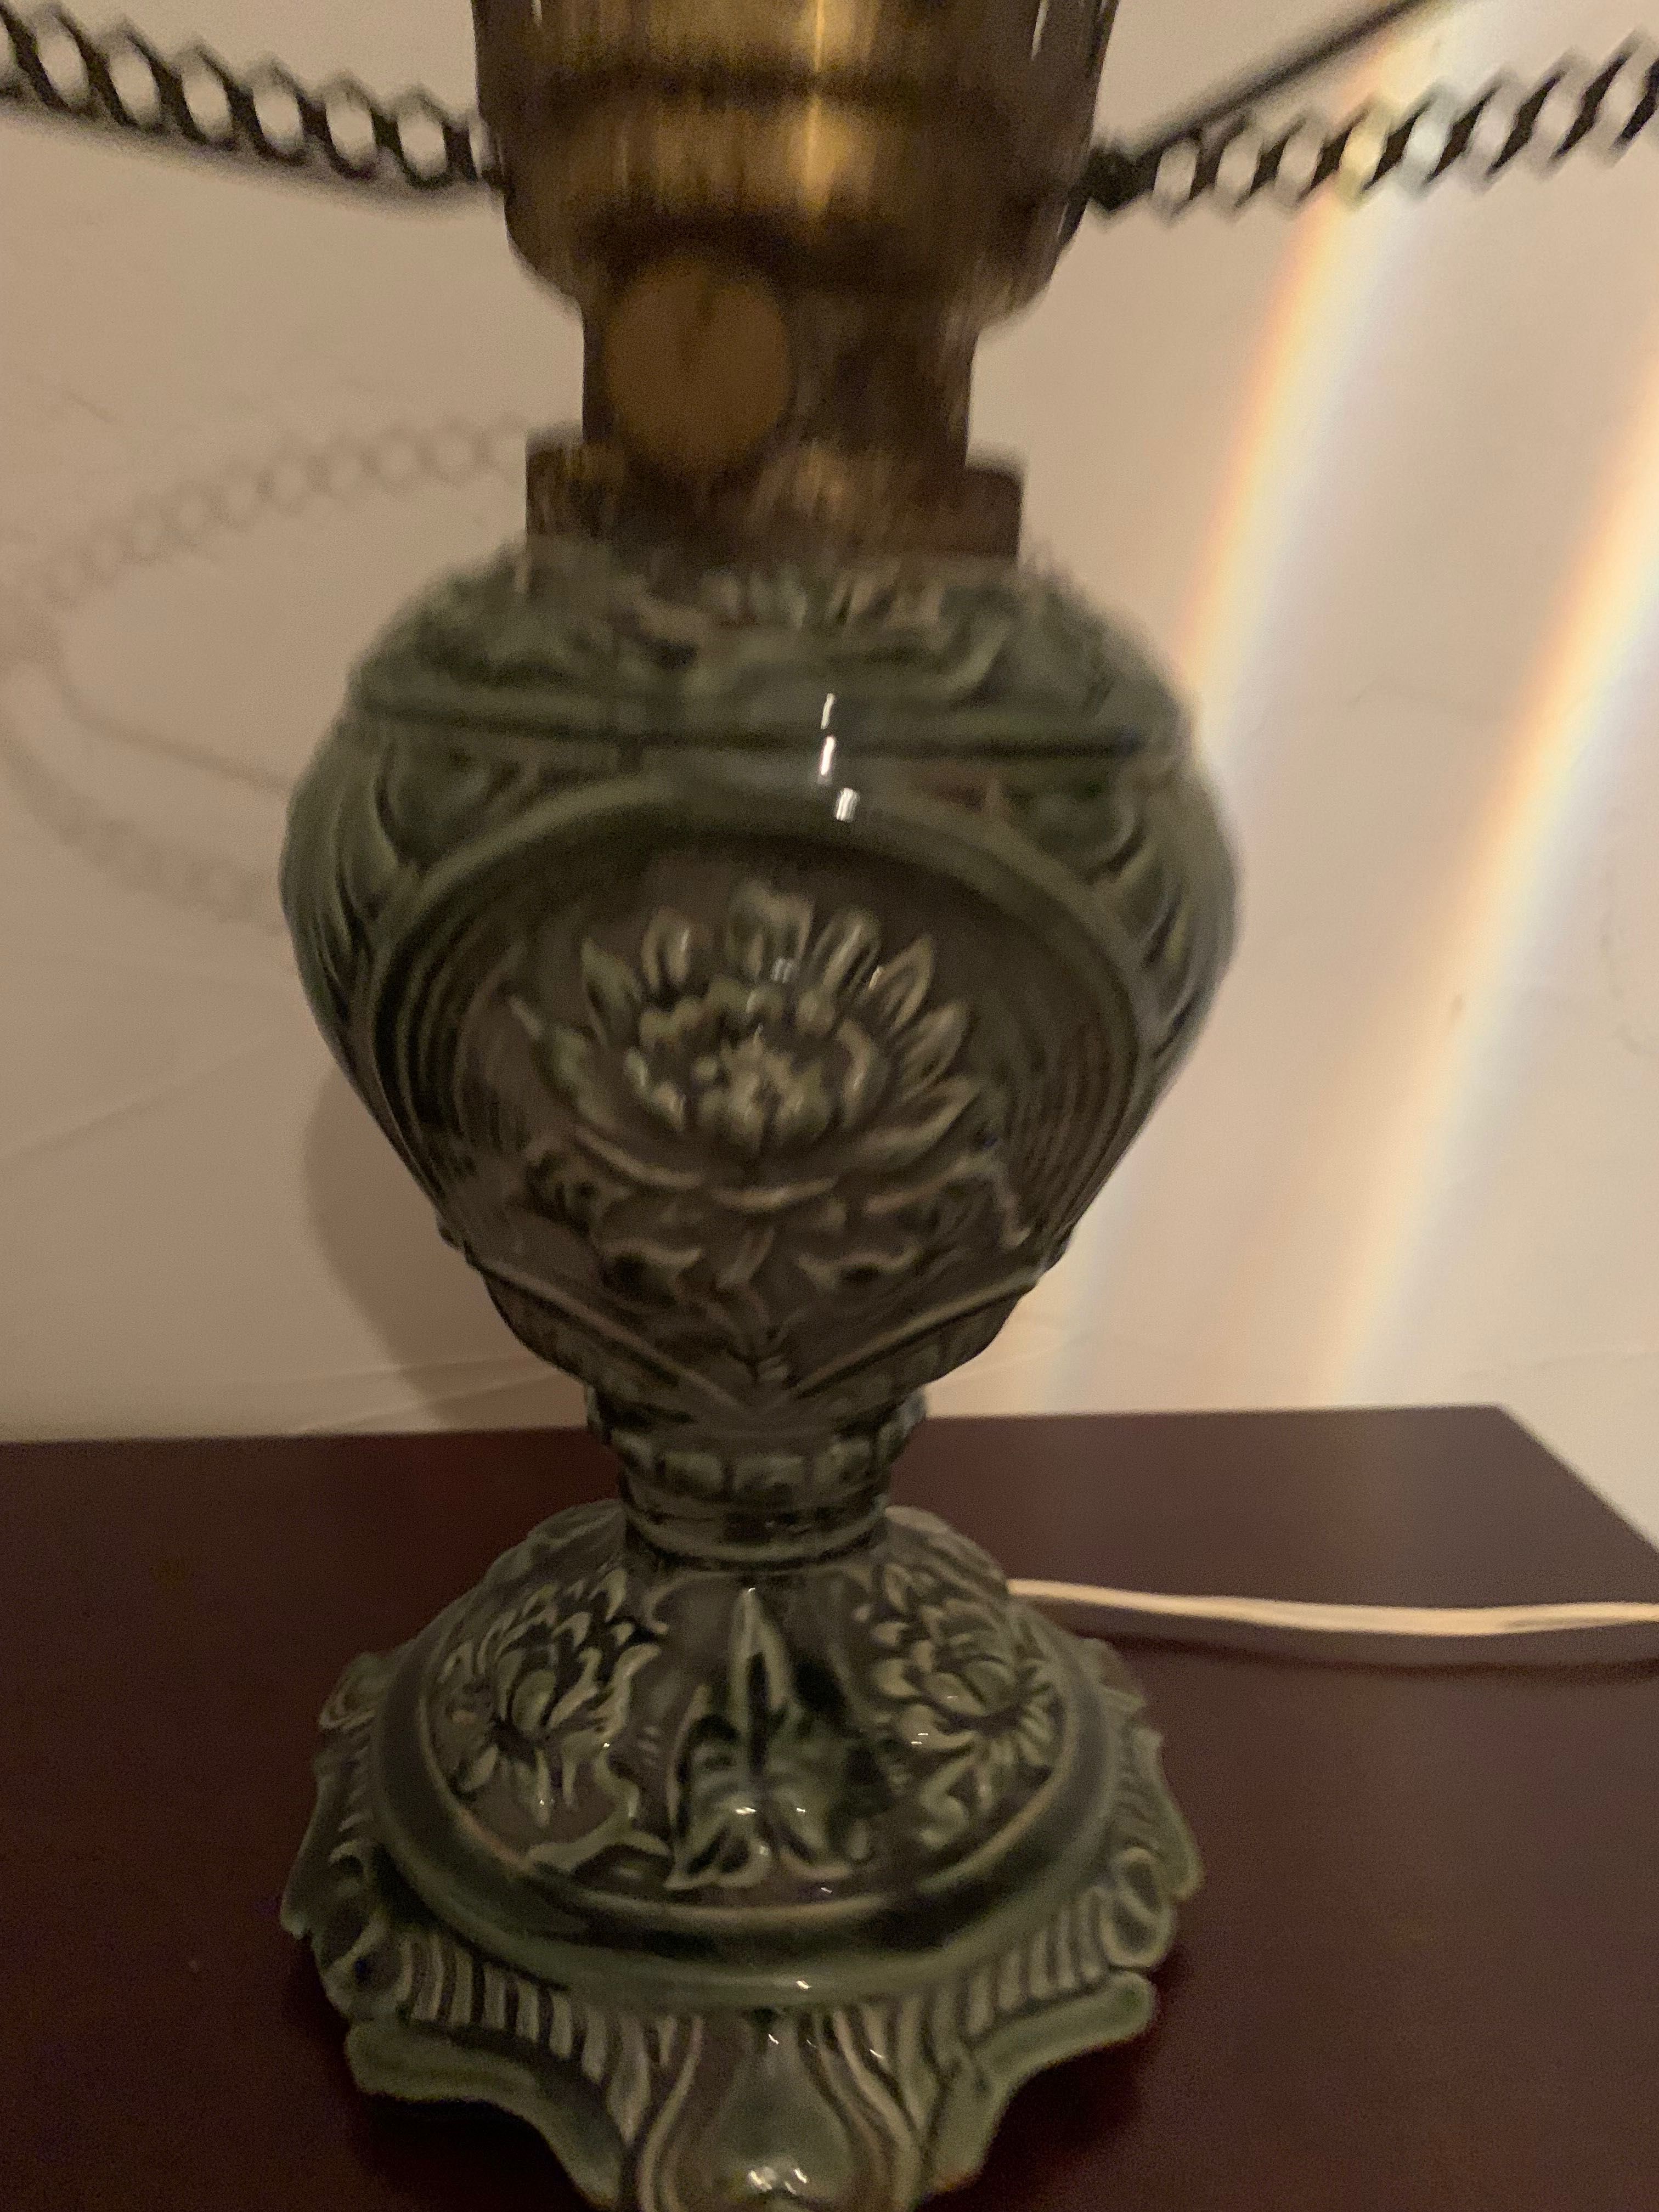 Stara lampa z kloszem